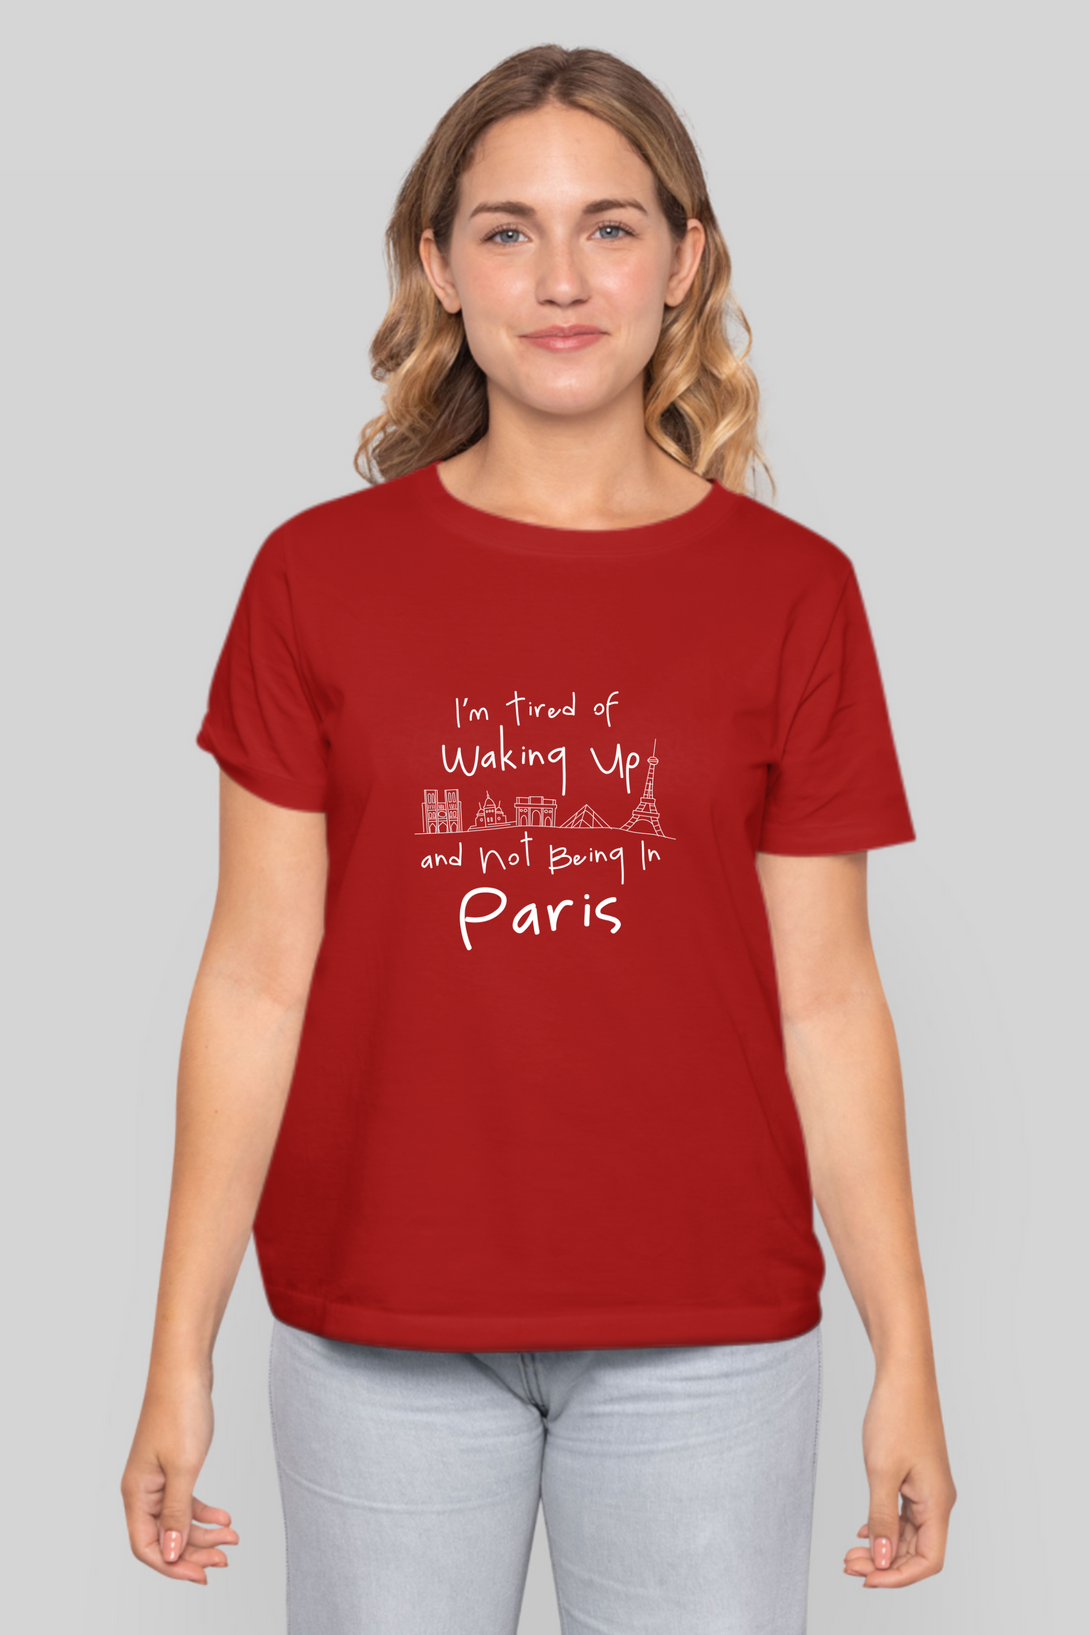 Paris Dreaming Printed T-Shirt For Women - WowWaves - 8